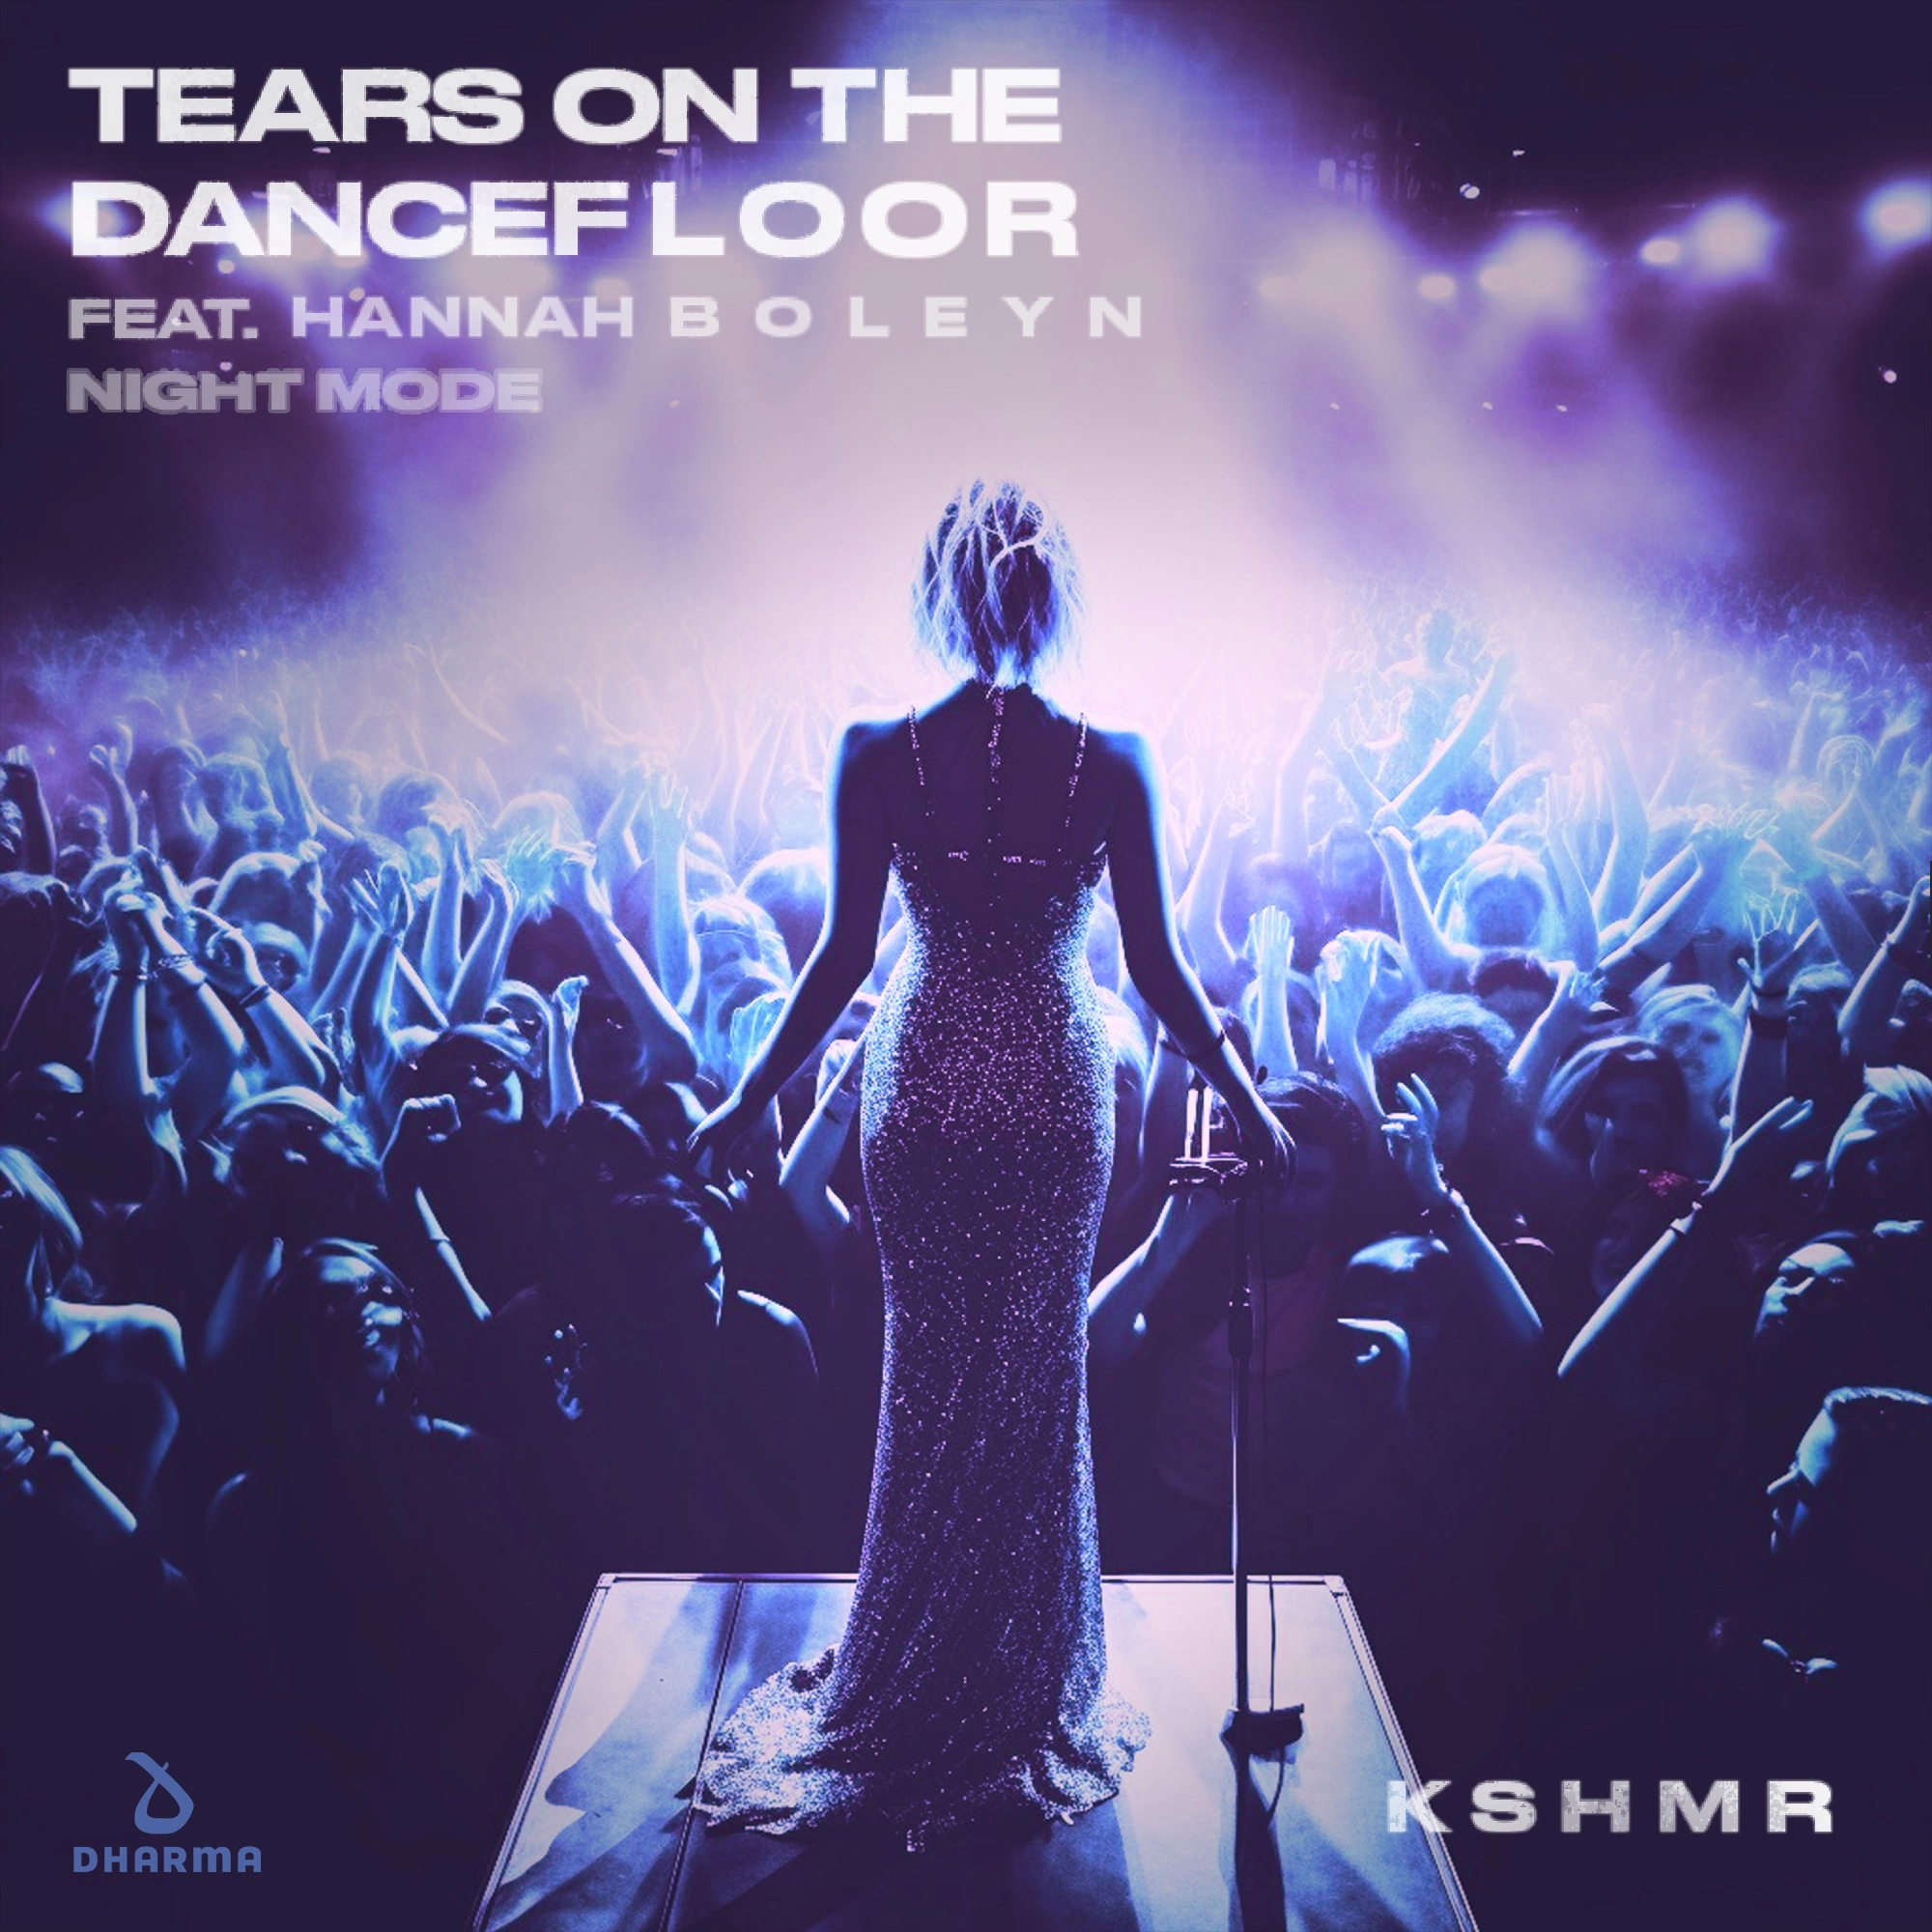 Kshmr - Tears On The Dancefloor feat. Hannah Broken (NIght Mode) (Extended Mix)